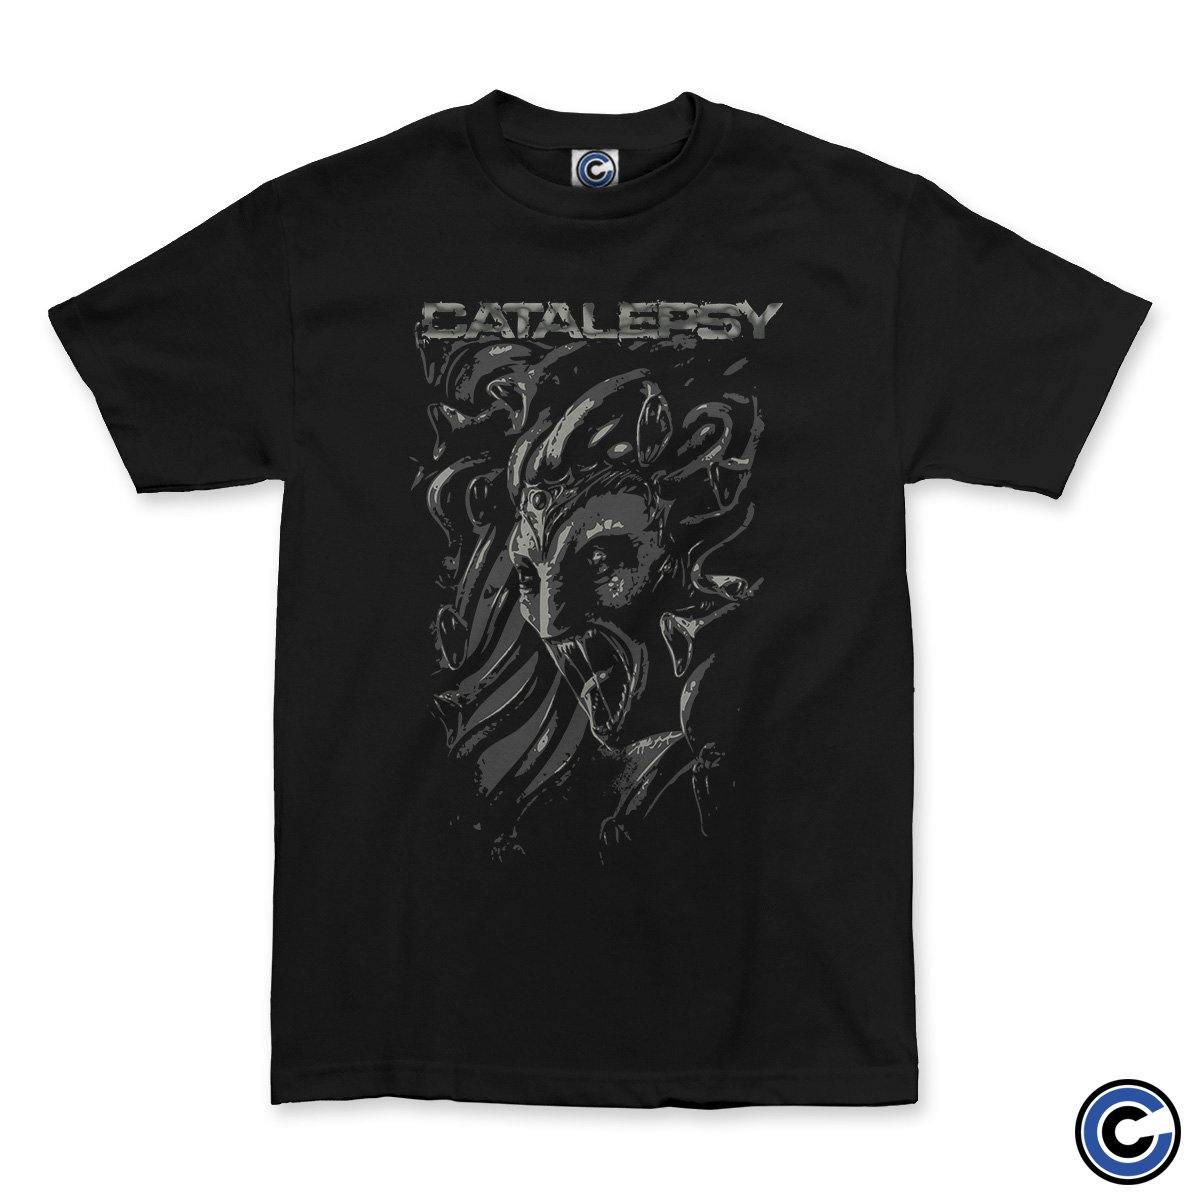 Buy – Catalepsy "Medusa" Shirt – Band & Music Merch – Cold Cuts Merch